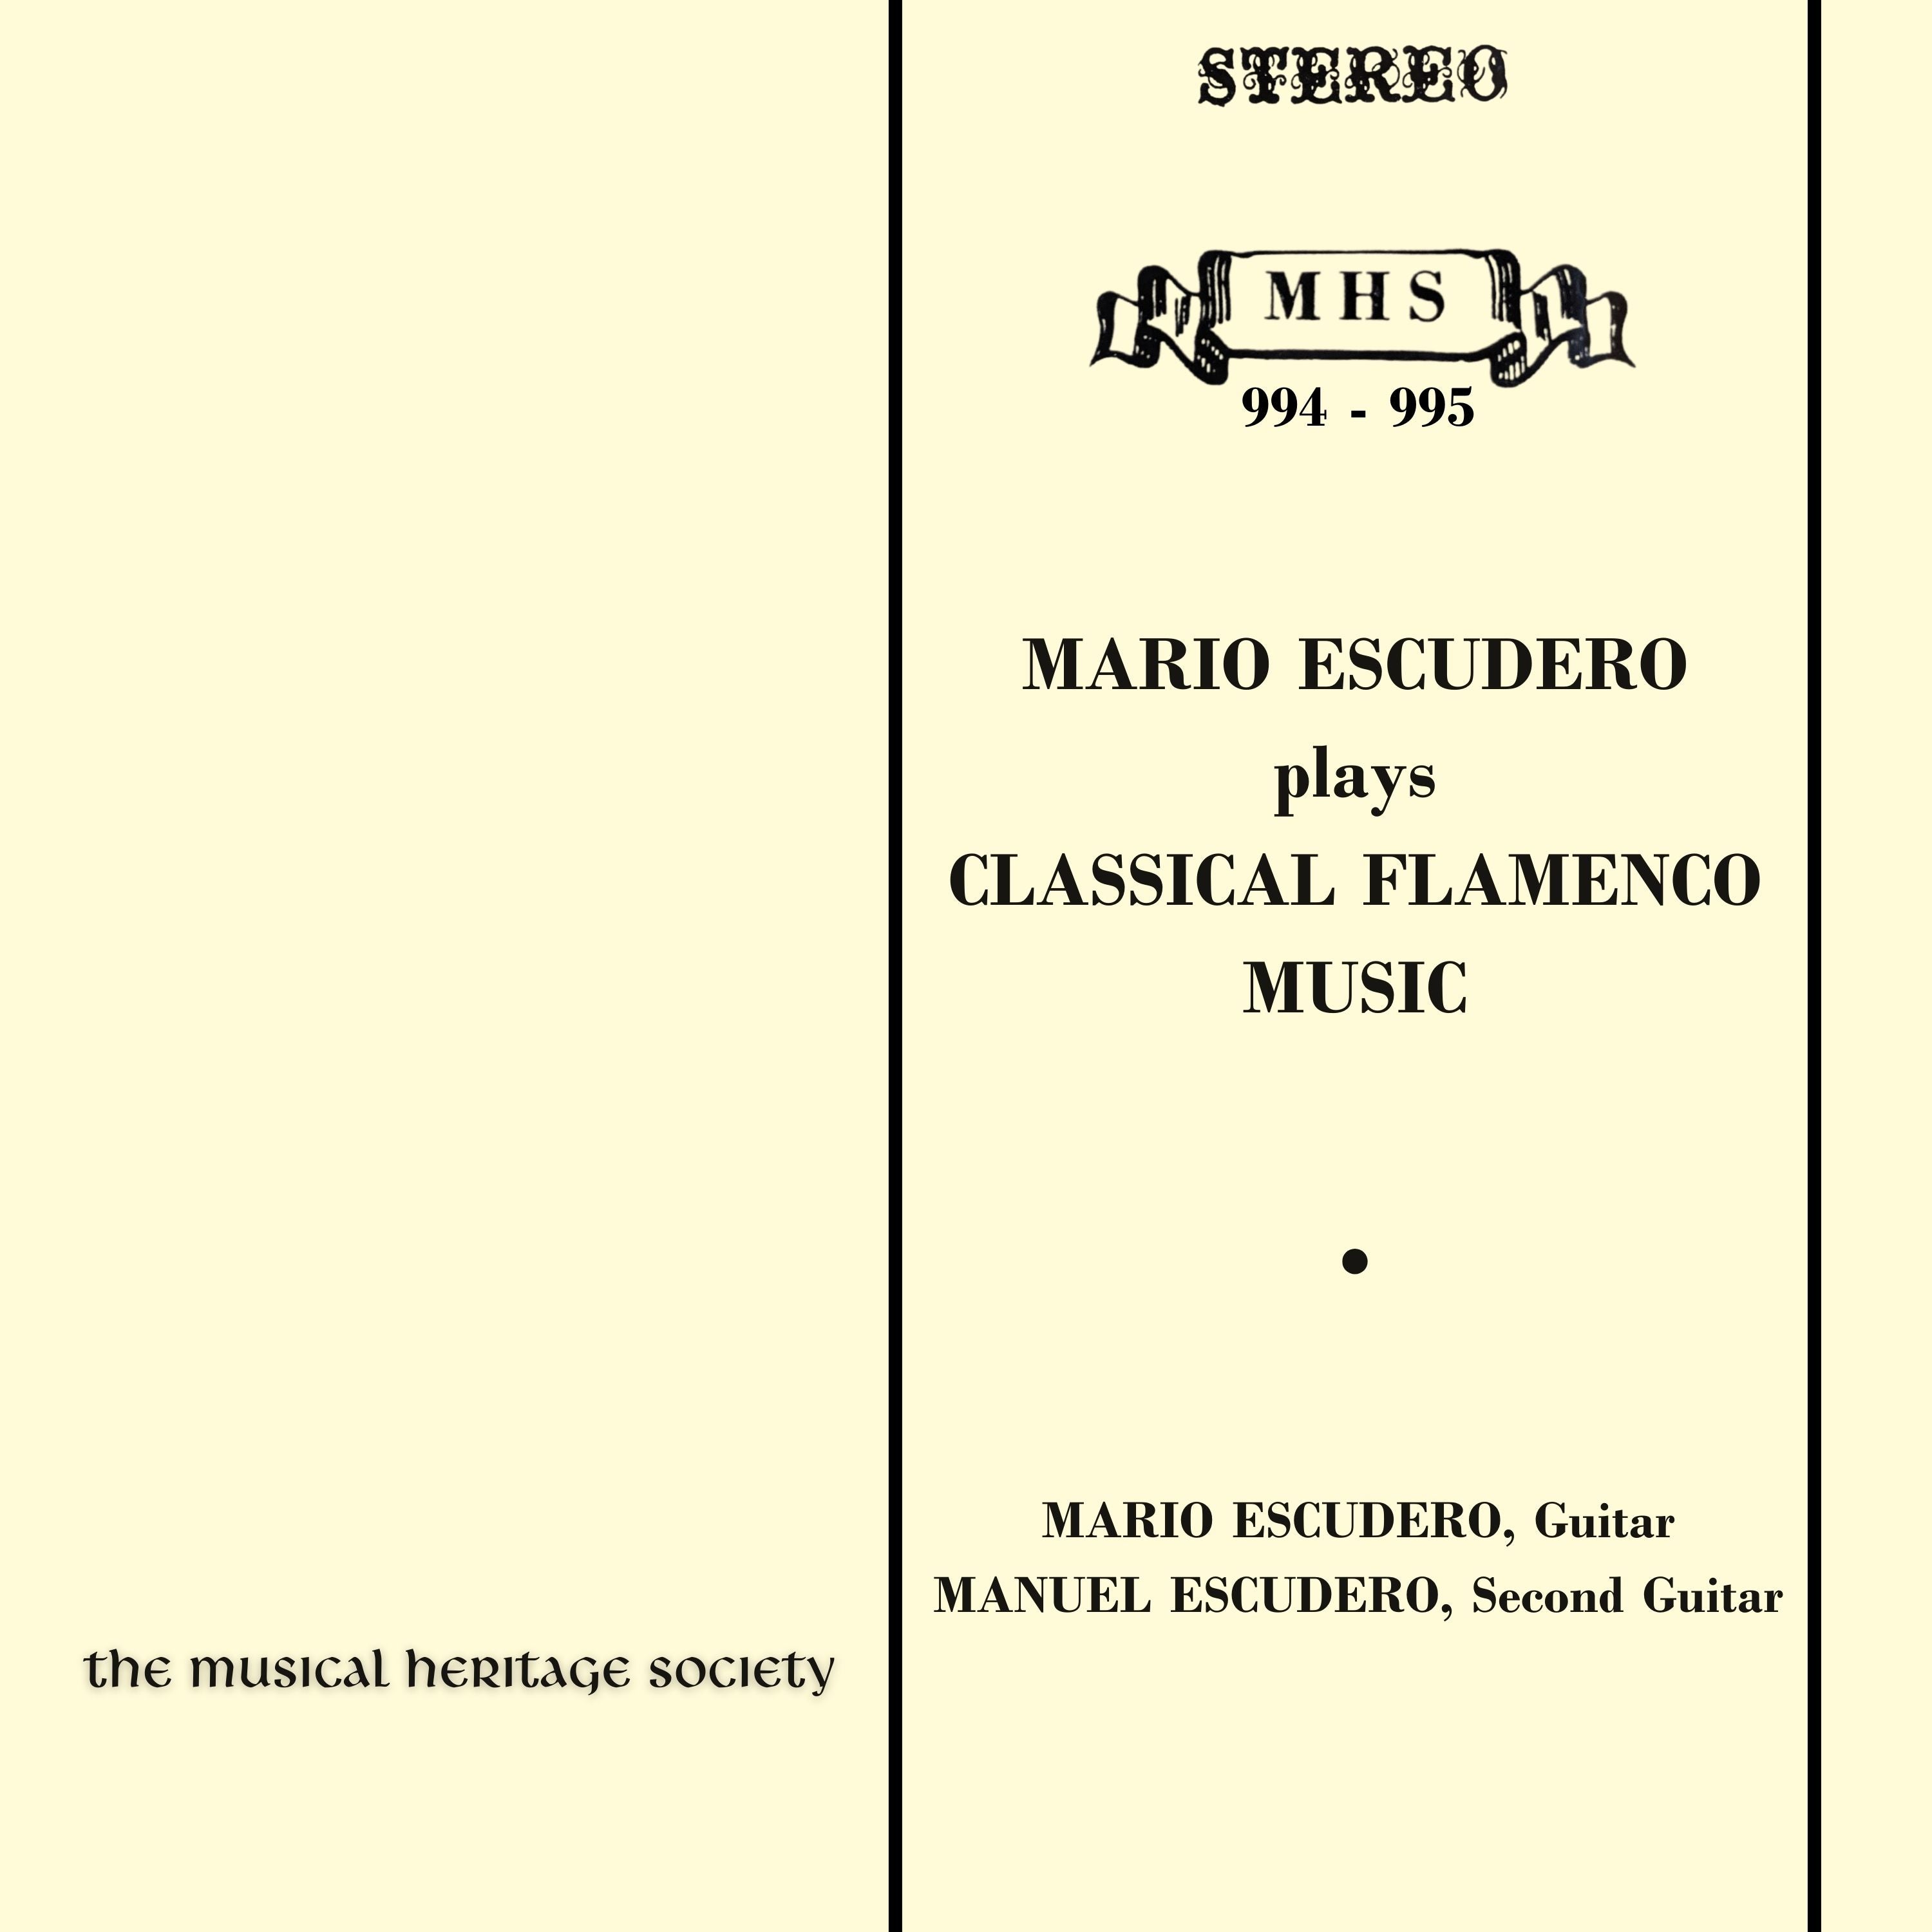 MARIO ESCUDERO PLAYS CLASSICAL FLAMENCO MUSIC